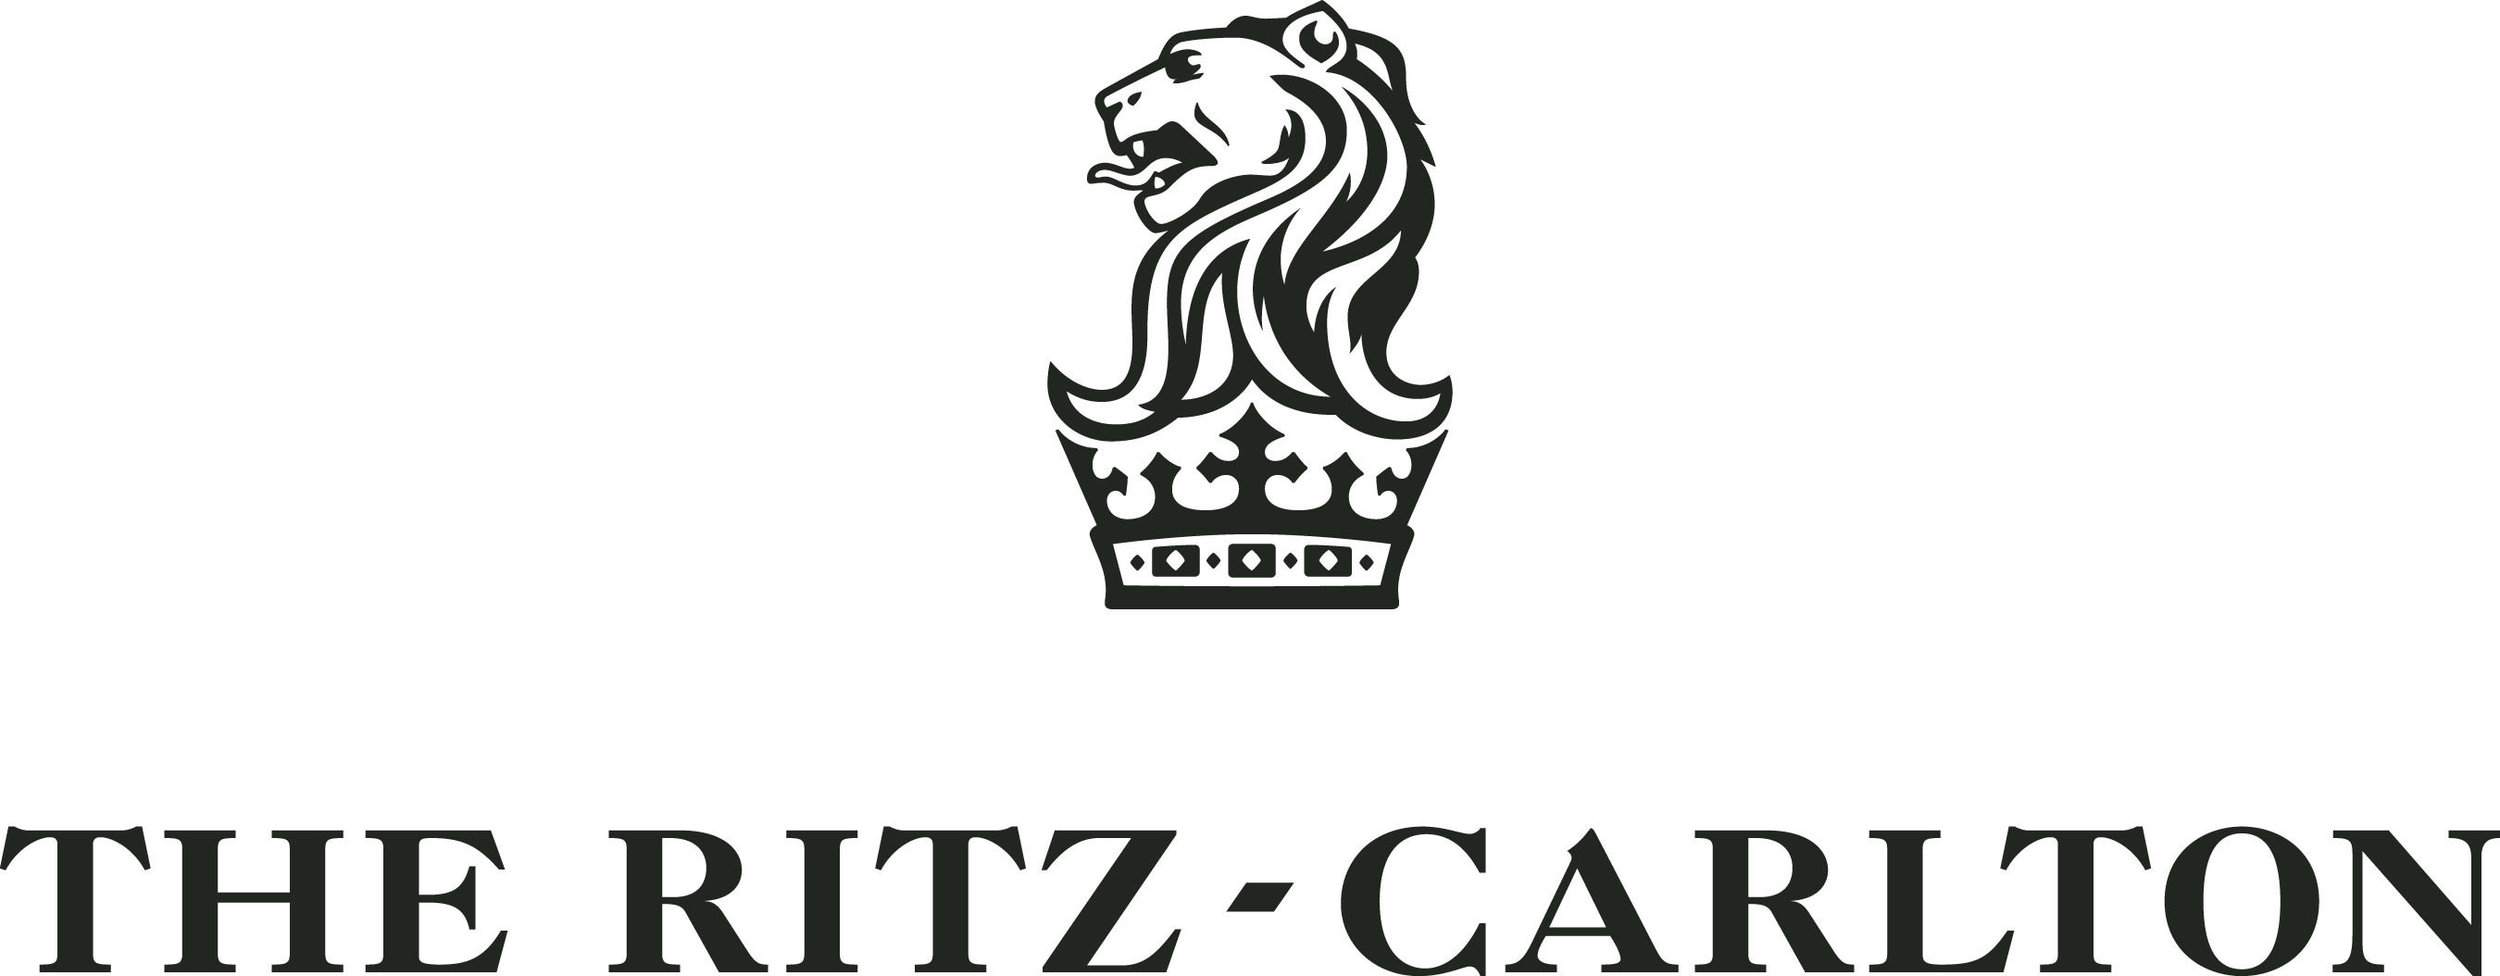 The Ritz Carlton.jpg